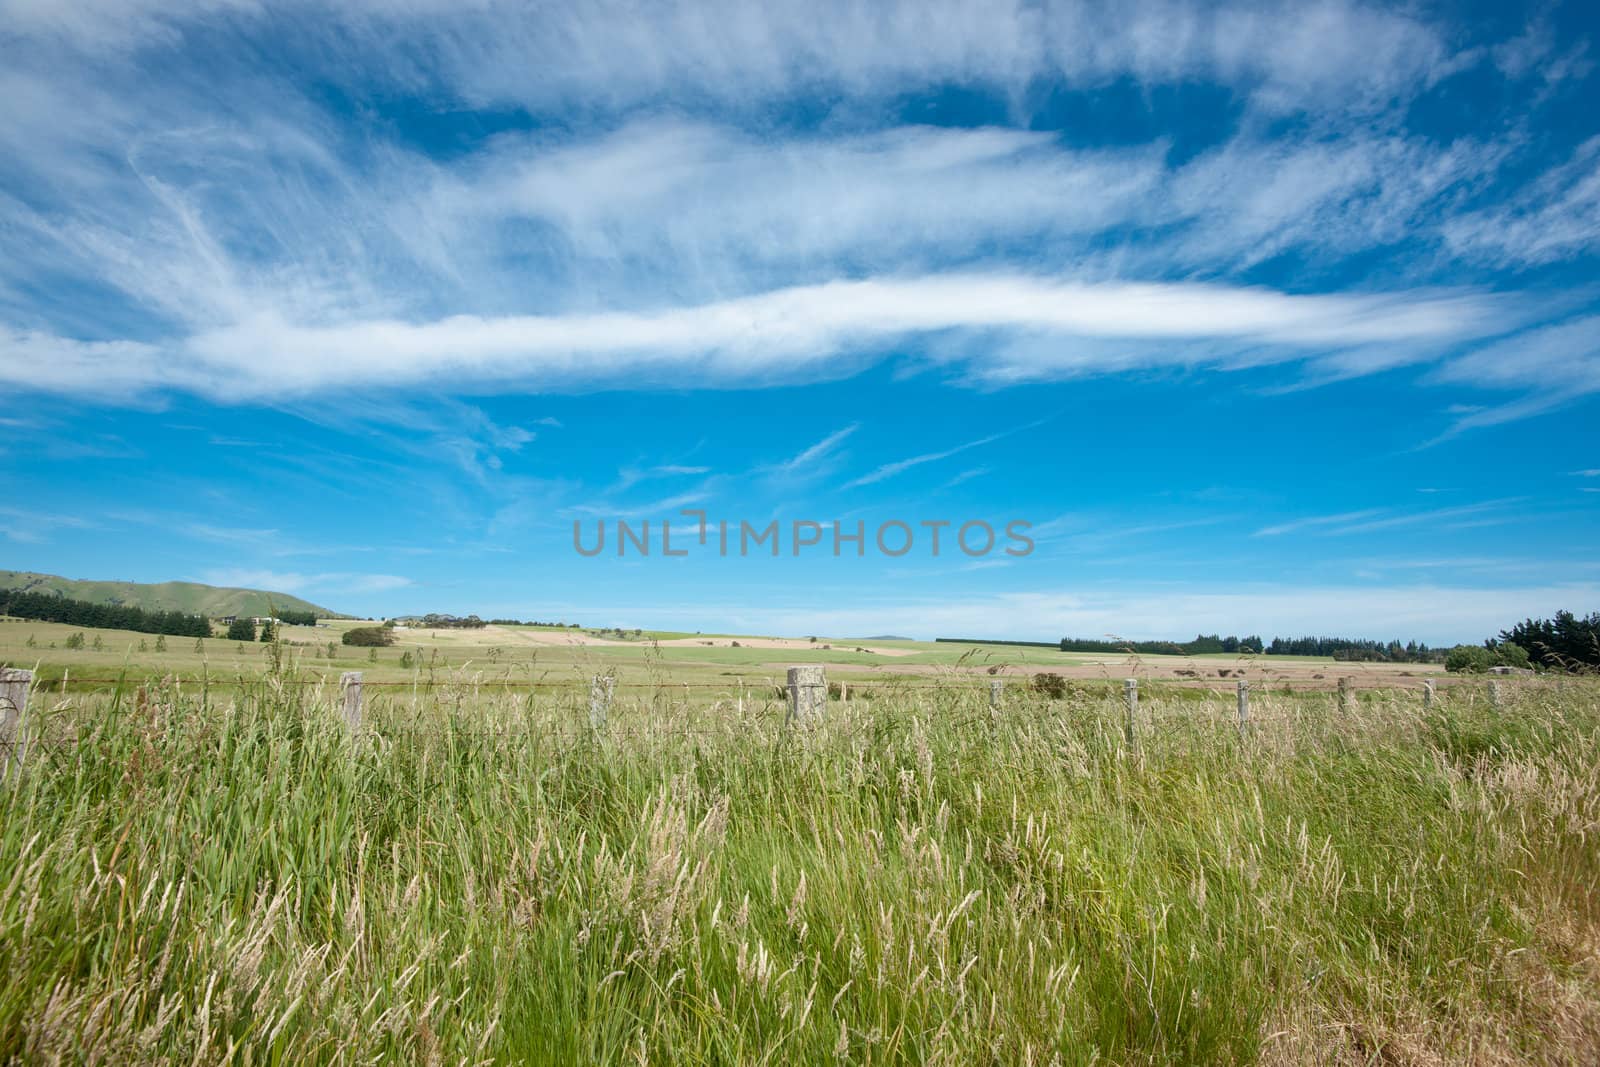 Cloudscape over rural landscape. by brians101